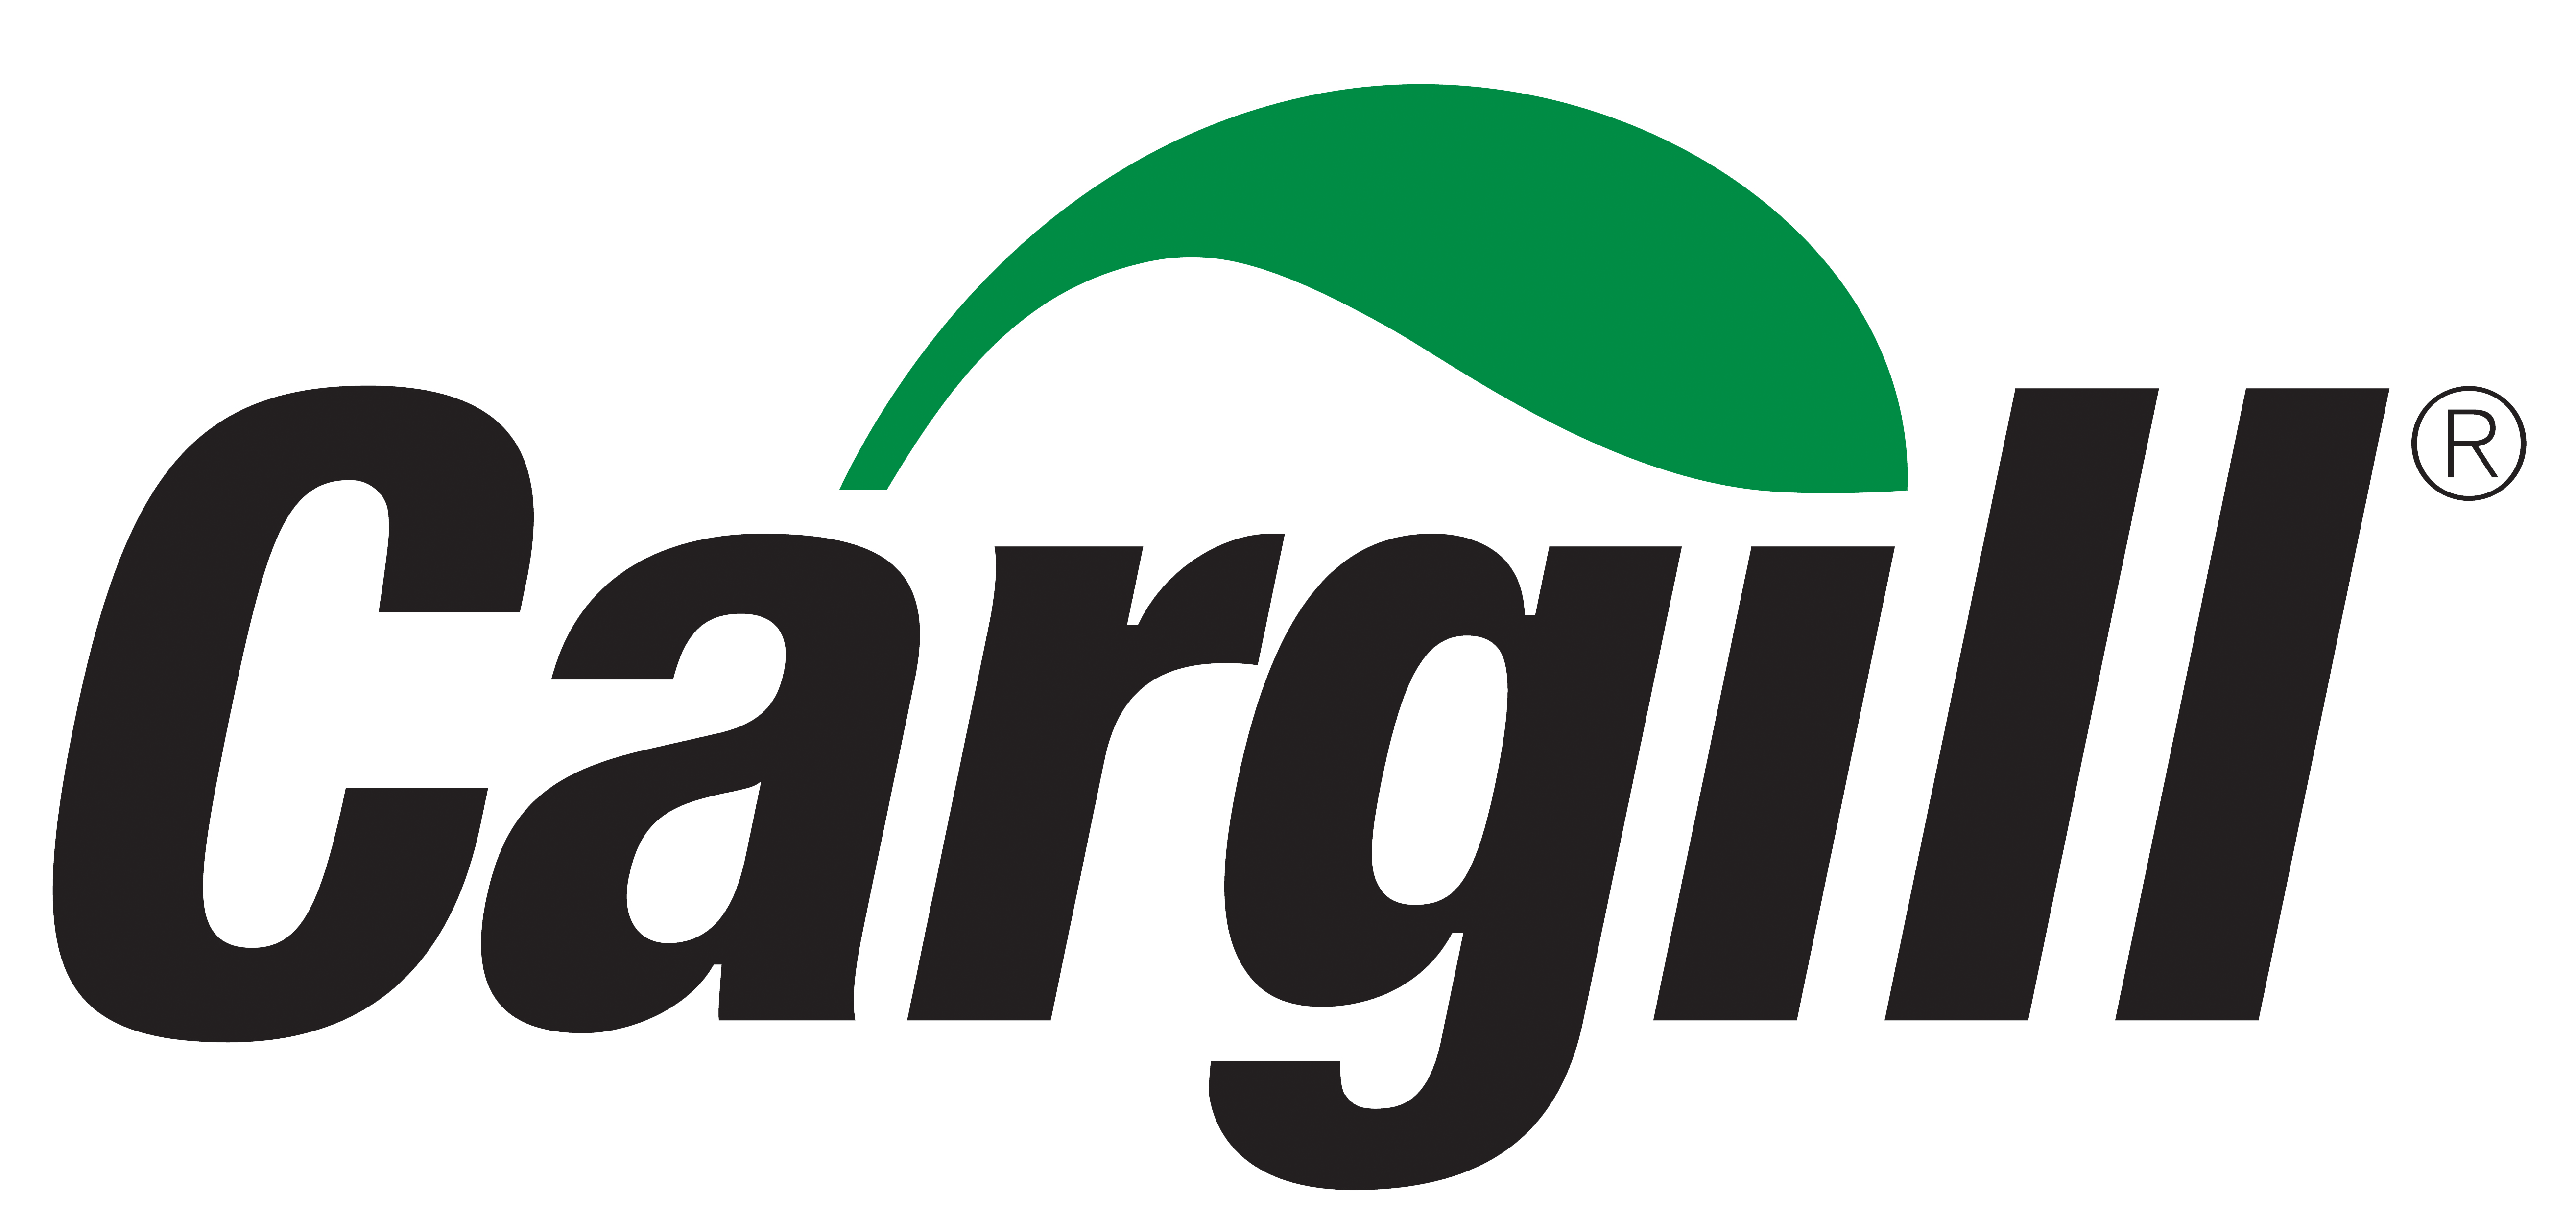 Cargill puesta